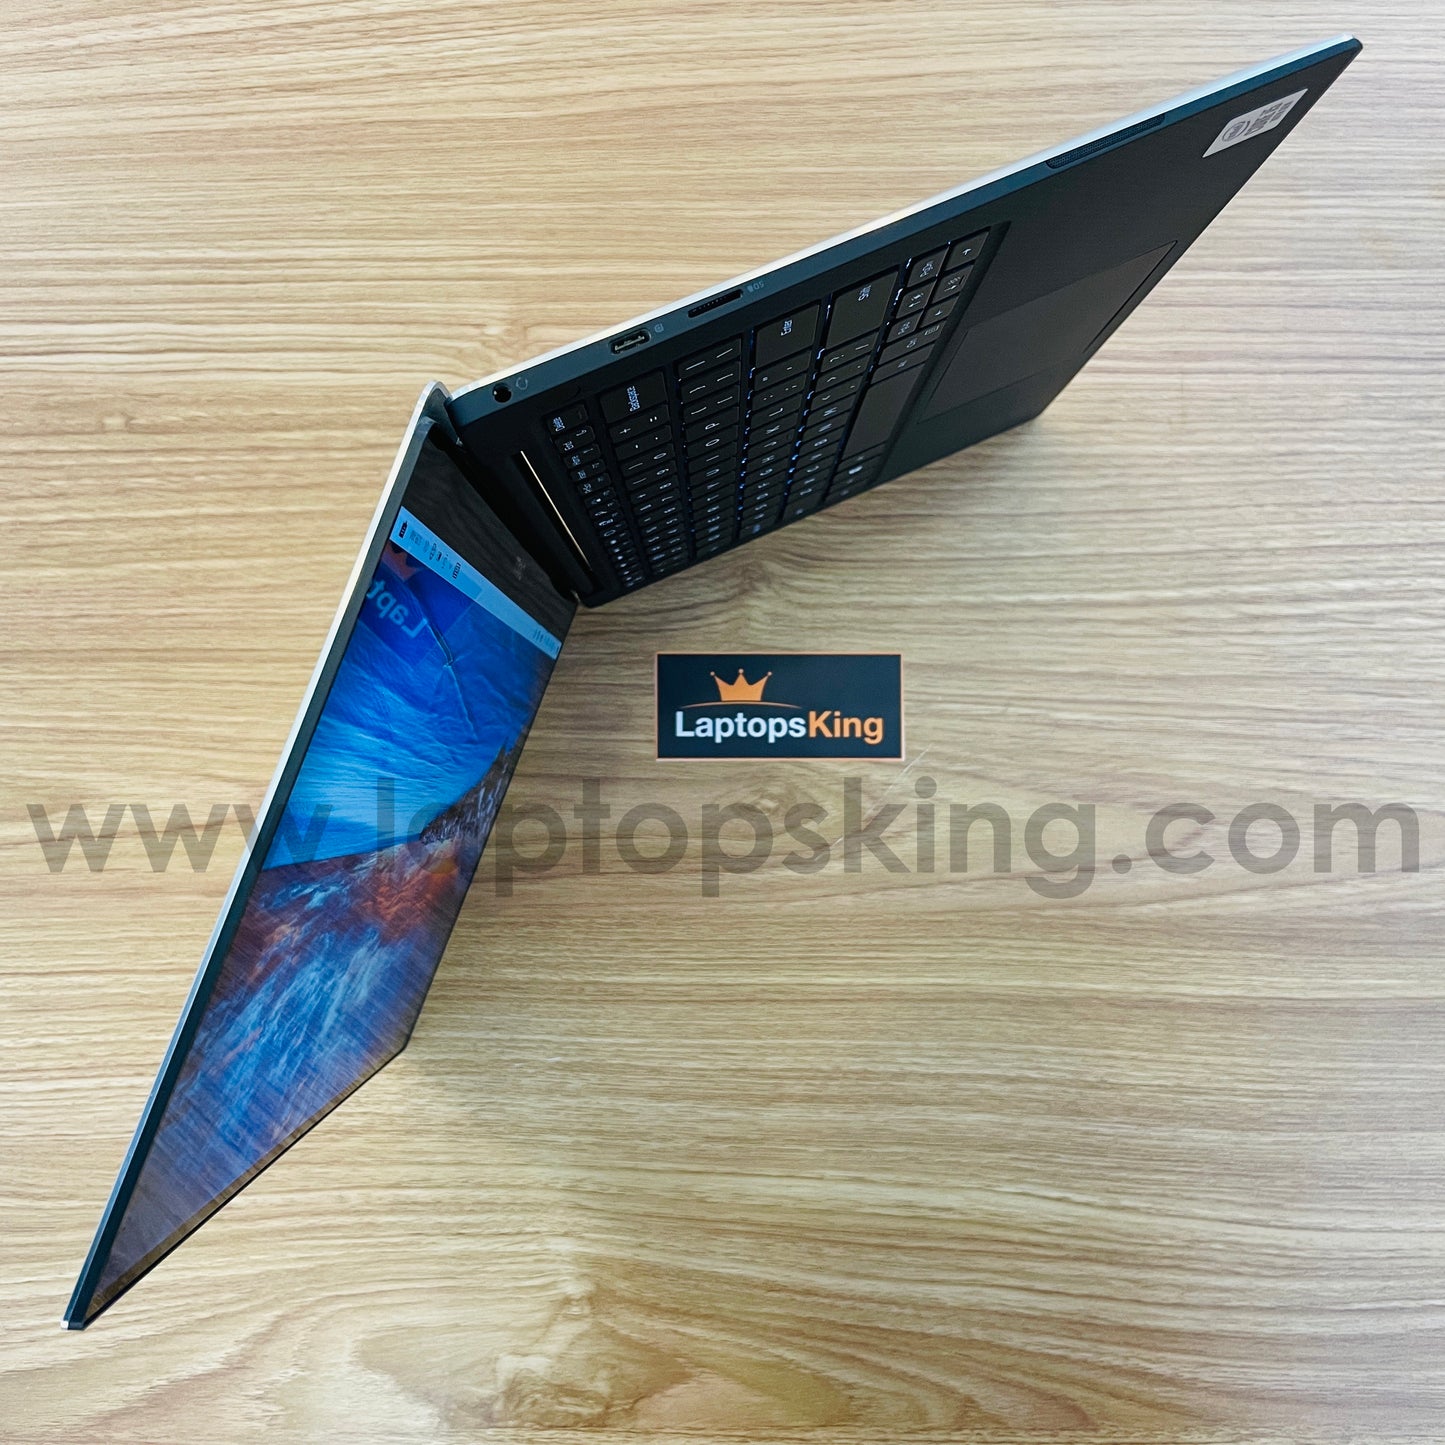 Dell XPS 13 7390 i5-10Th Gen 4gb Ram 128gb NVMe Laptop (New Open Box)